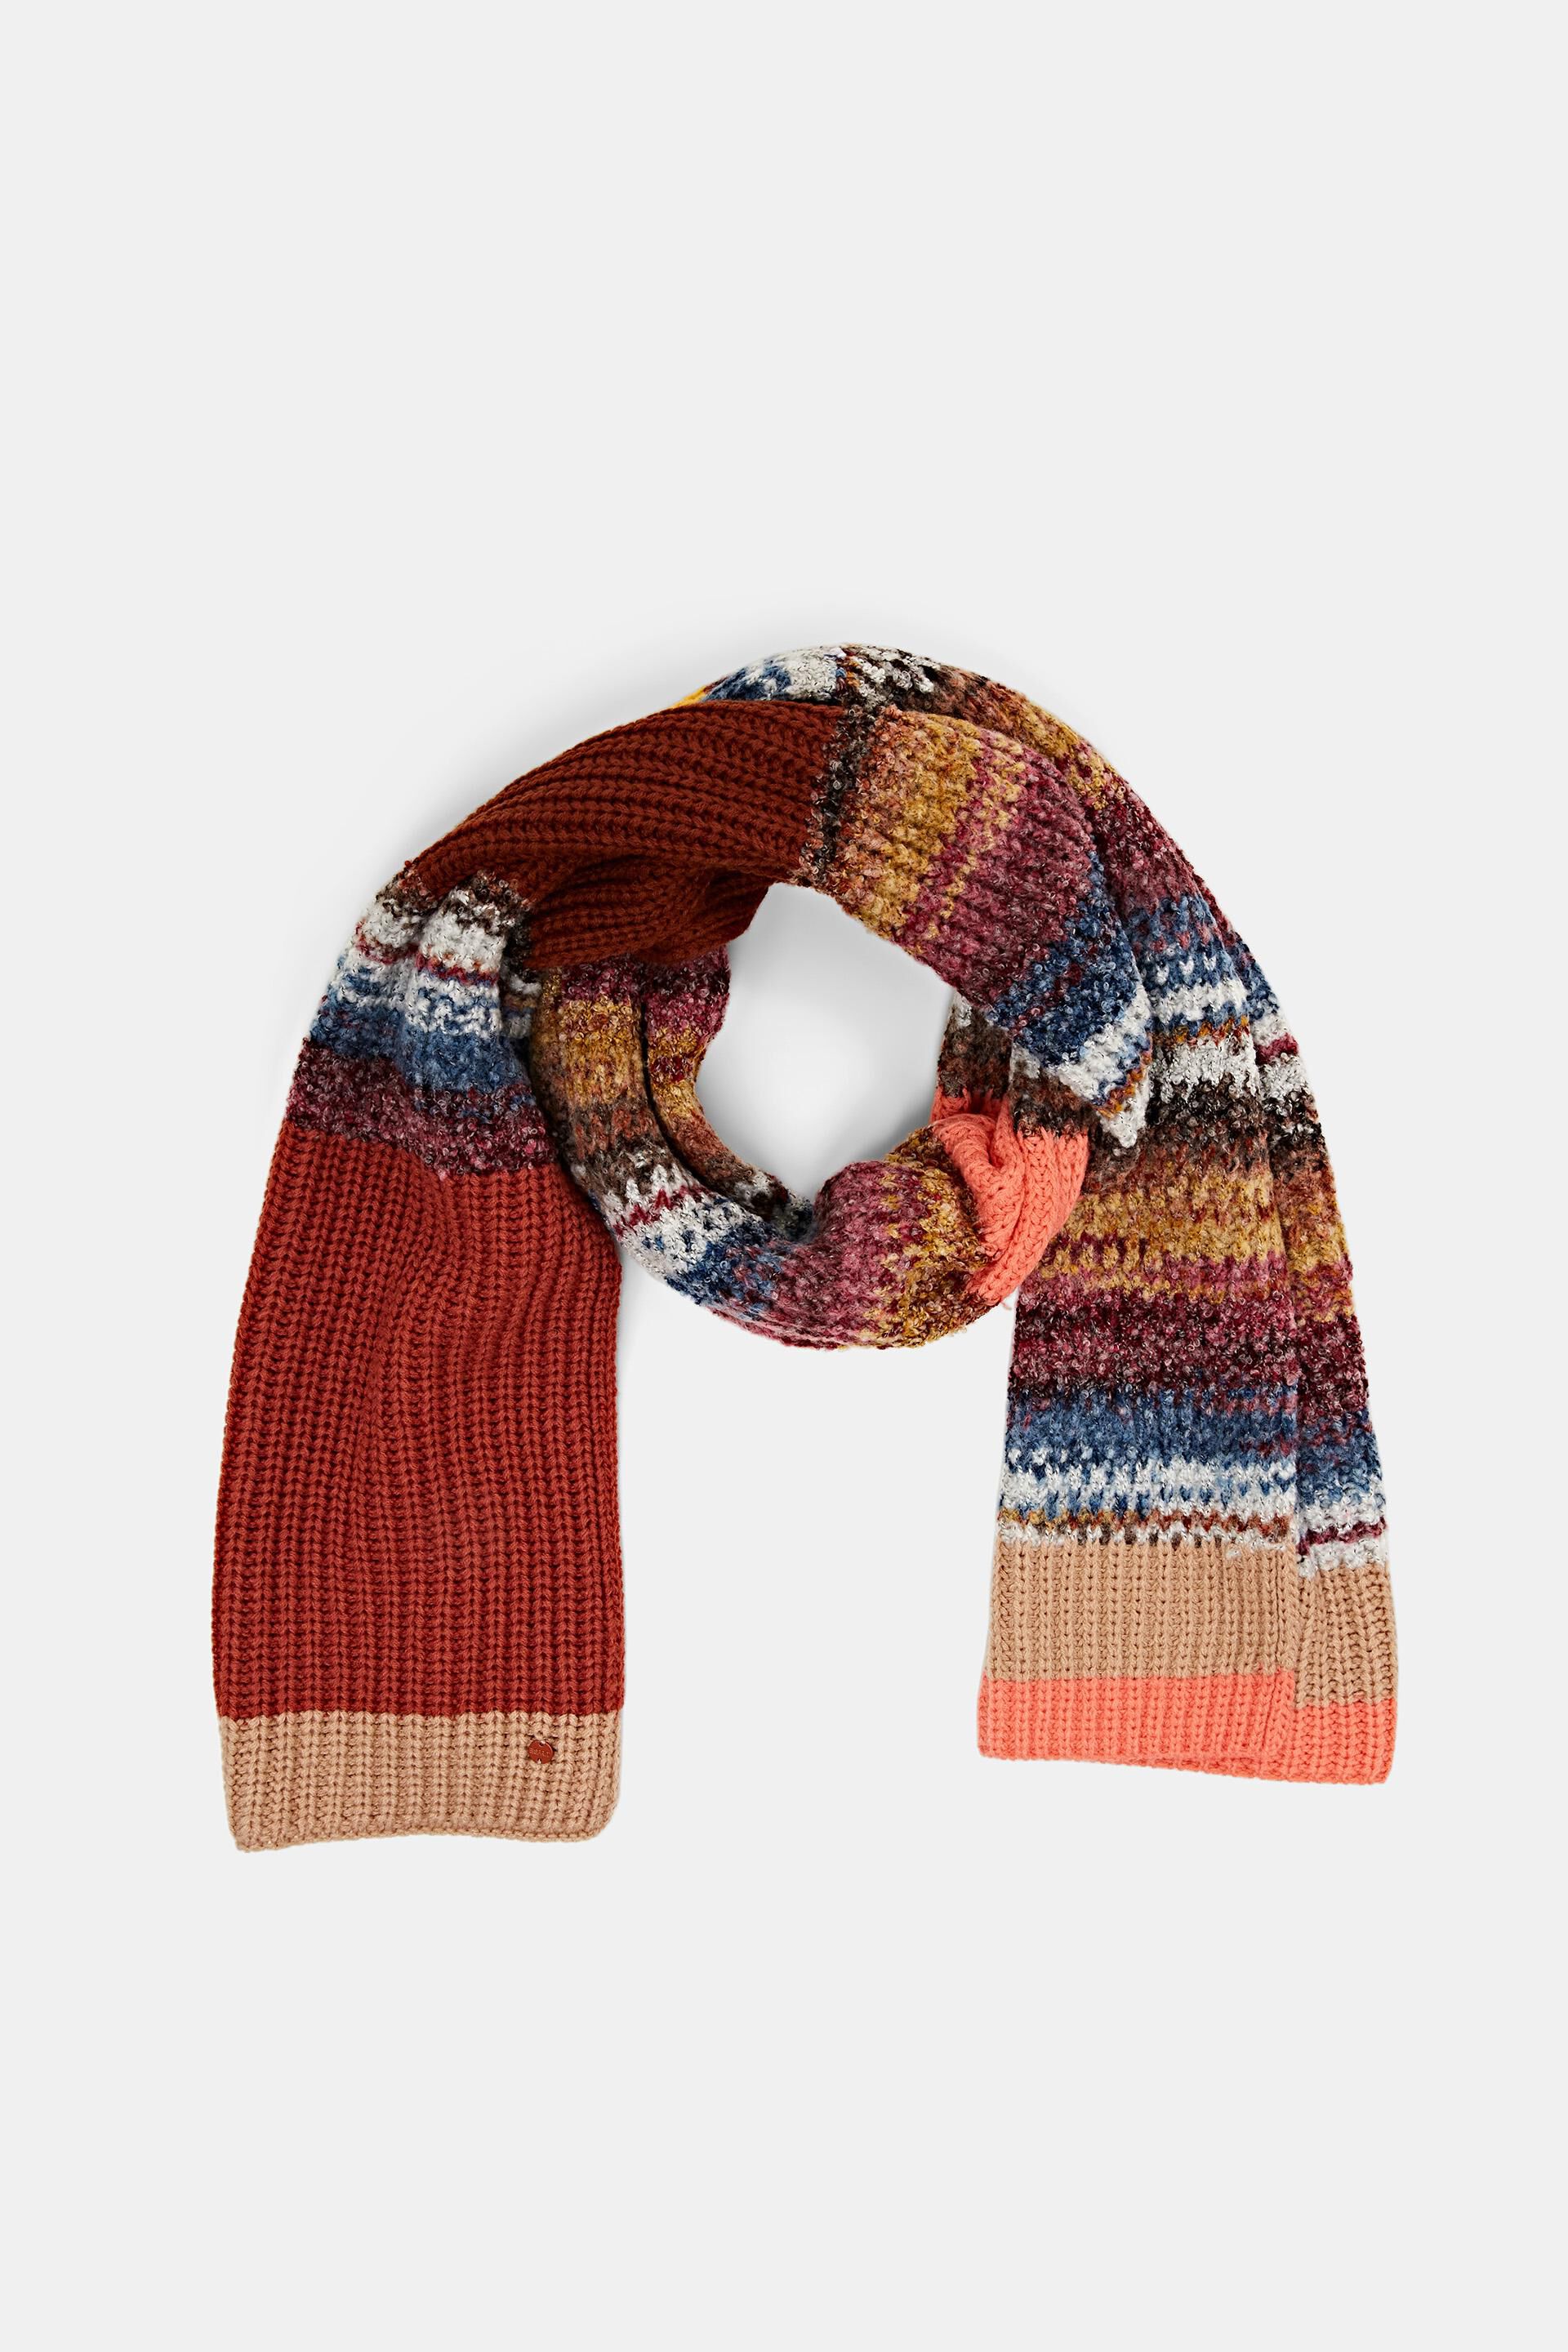 Esprit wool Multi-coloured scarf, knit blend